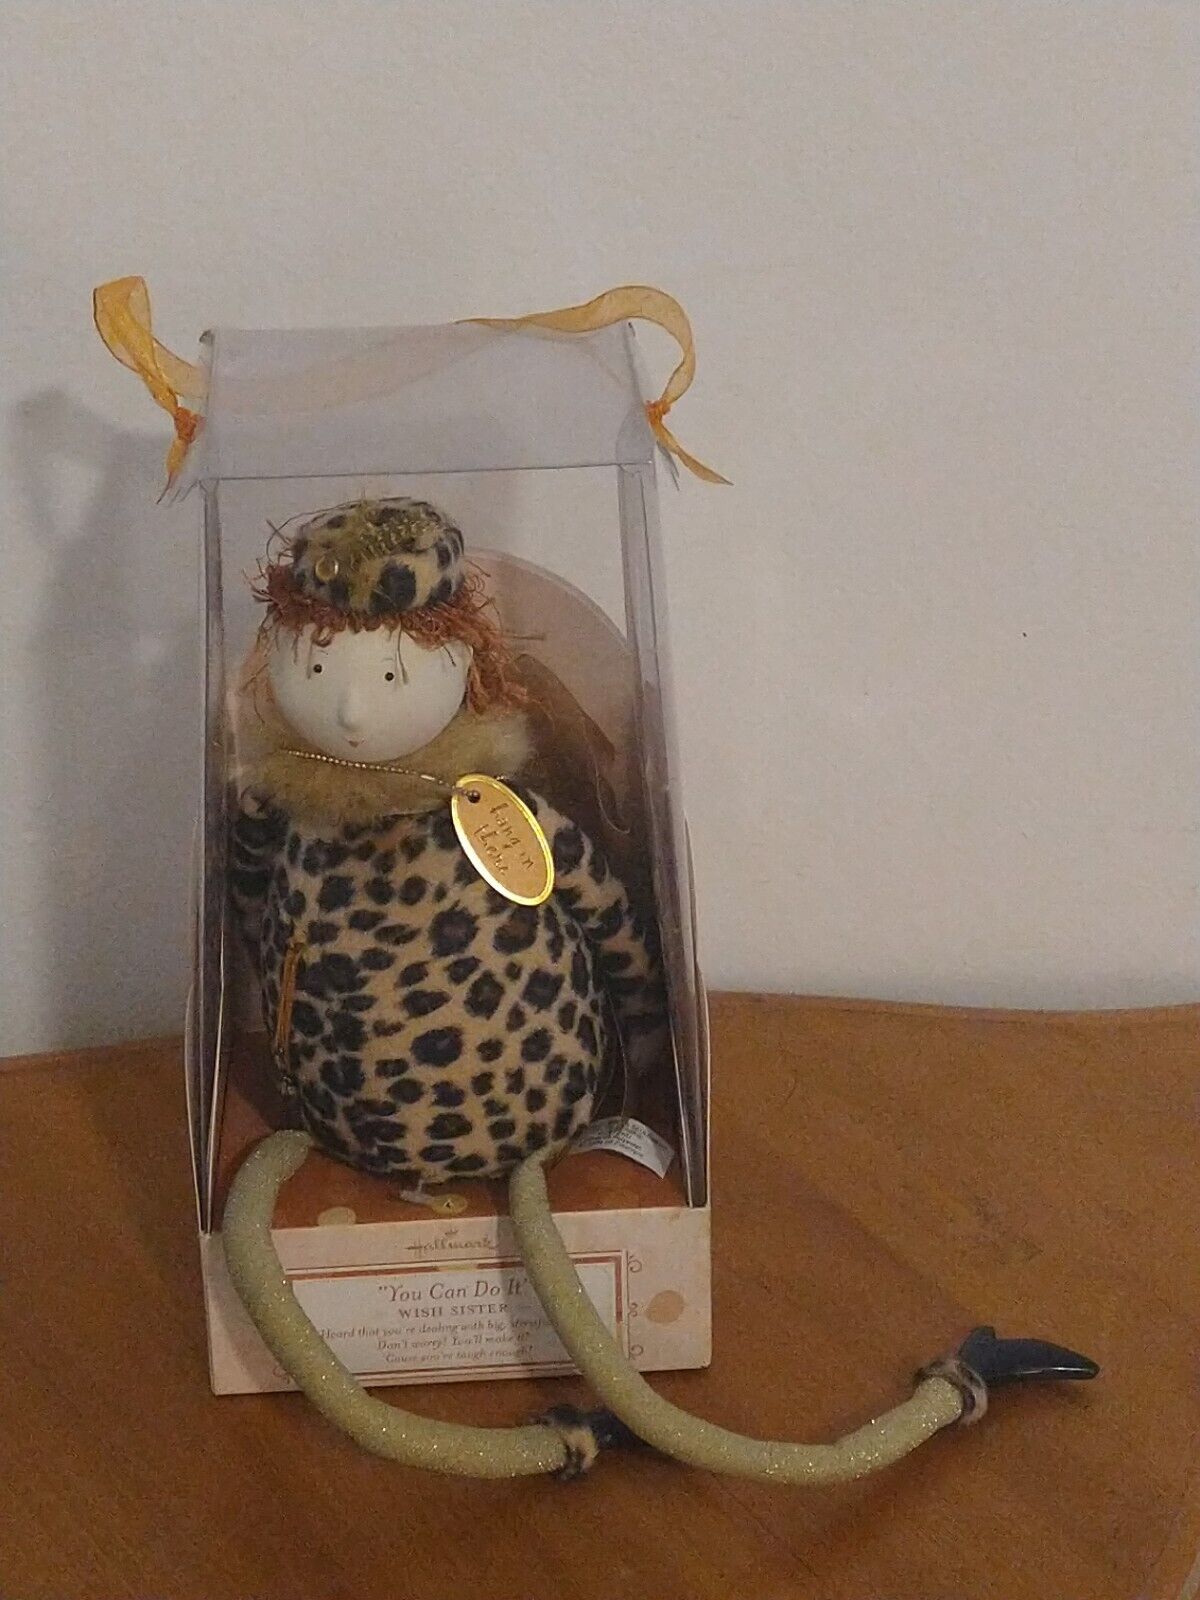 Vintage Hallmark Wish Sister You Can Do It Friendship Shelf Sitter Doll Leopard